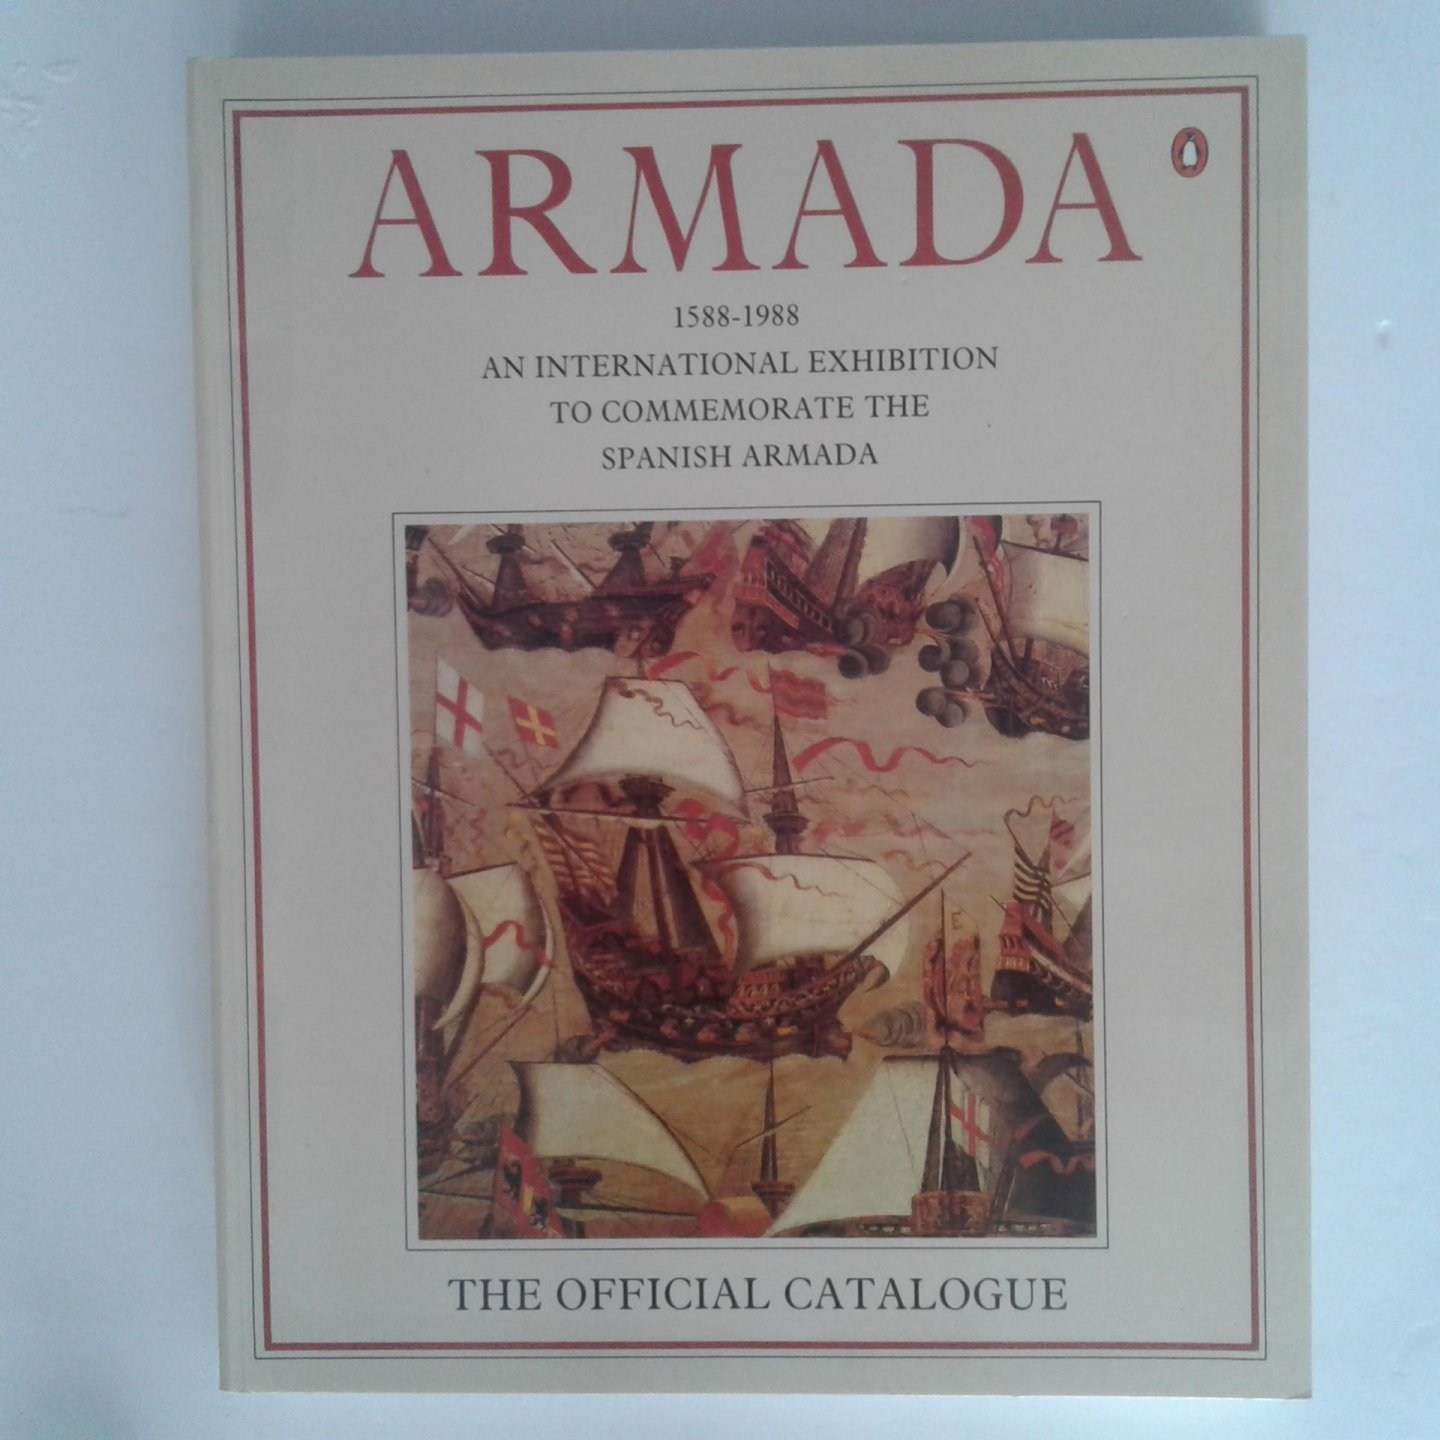  - Armada ; 1588-1988, An International Exhibition to commemorate the Spanish Armada